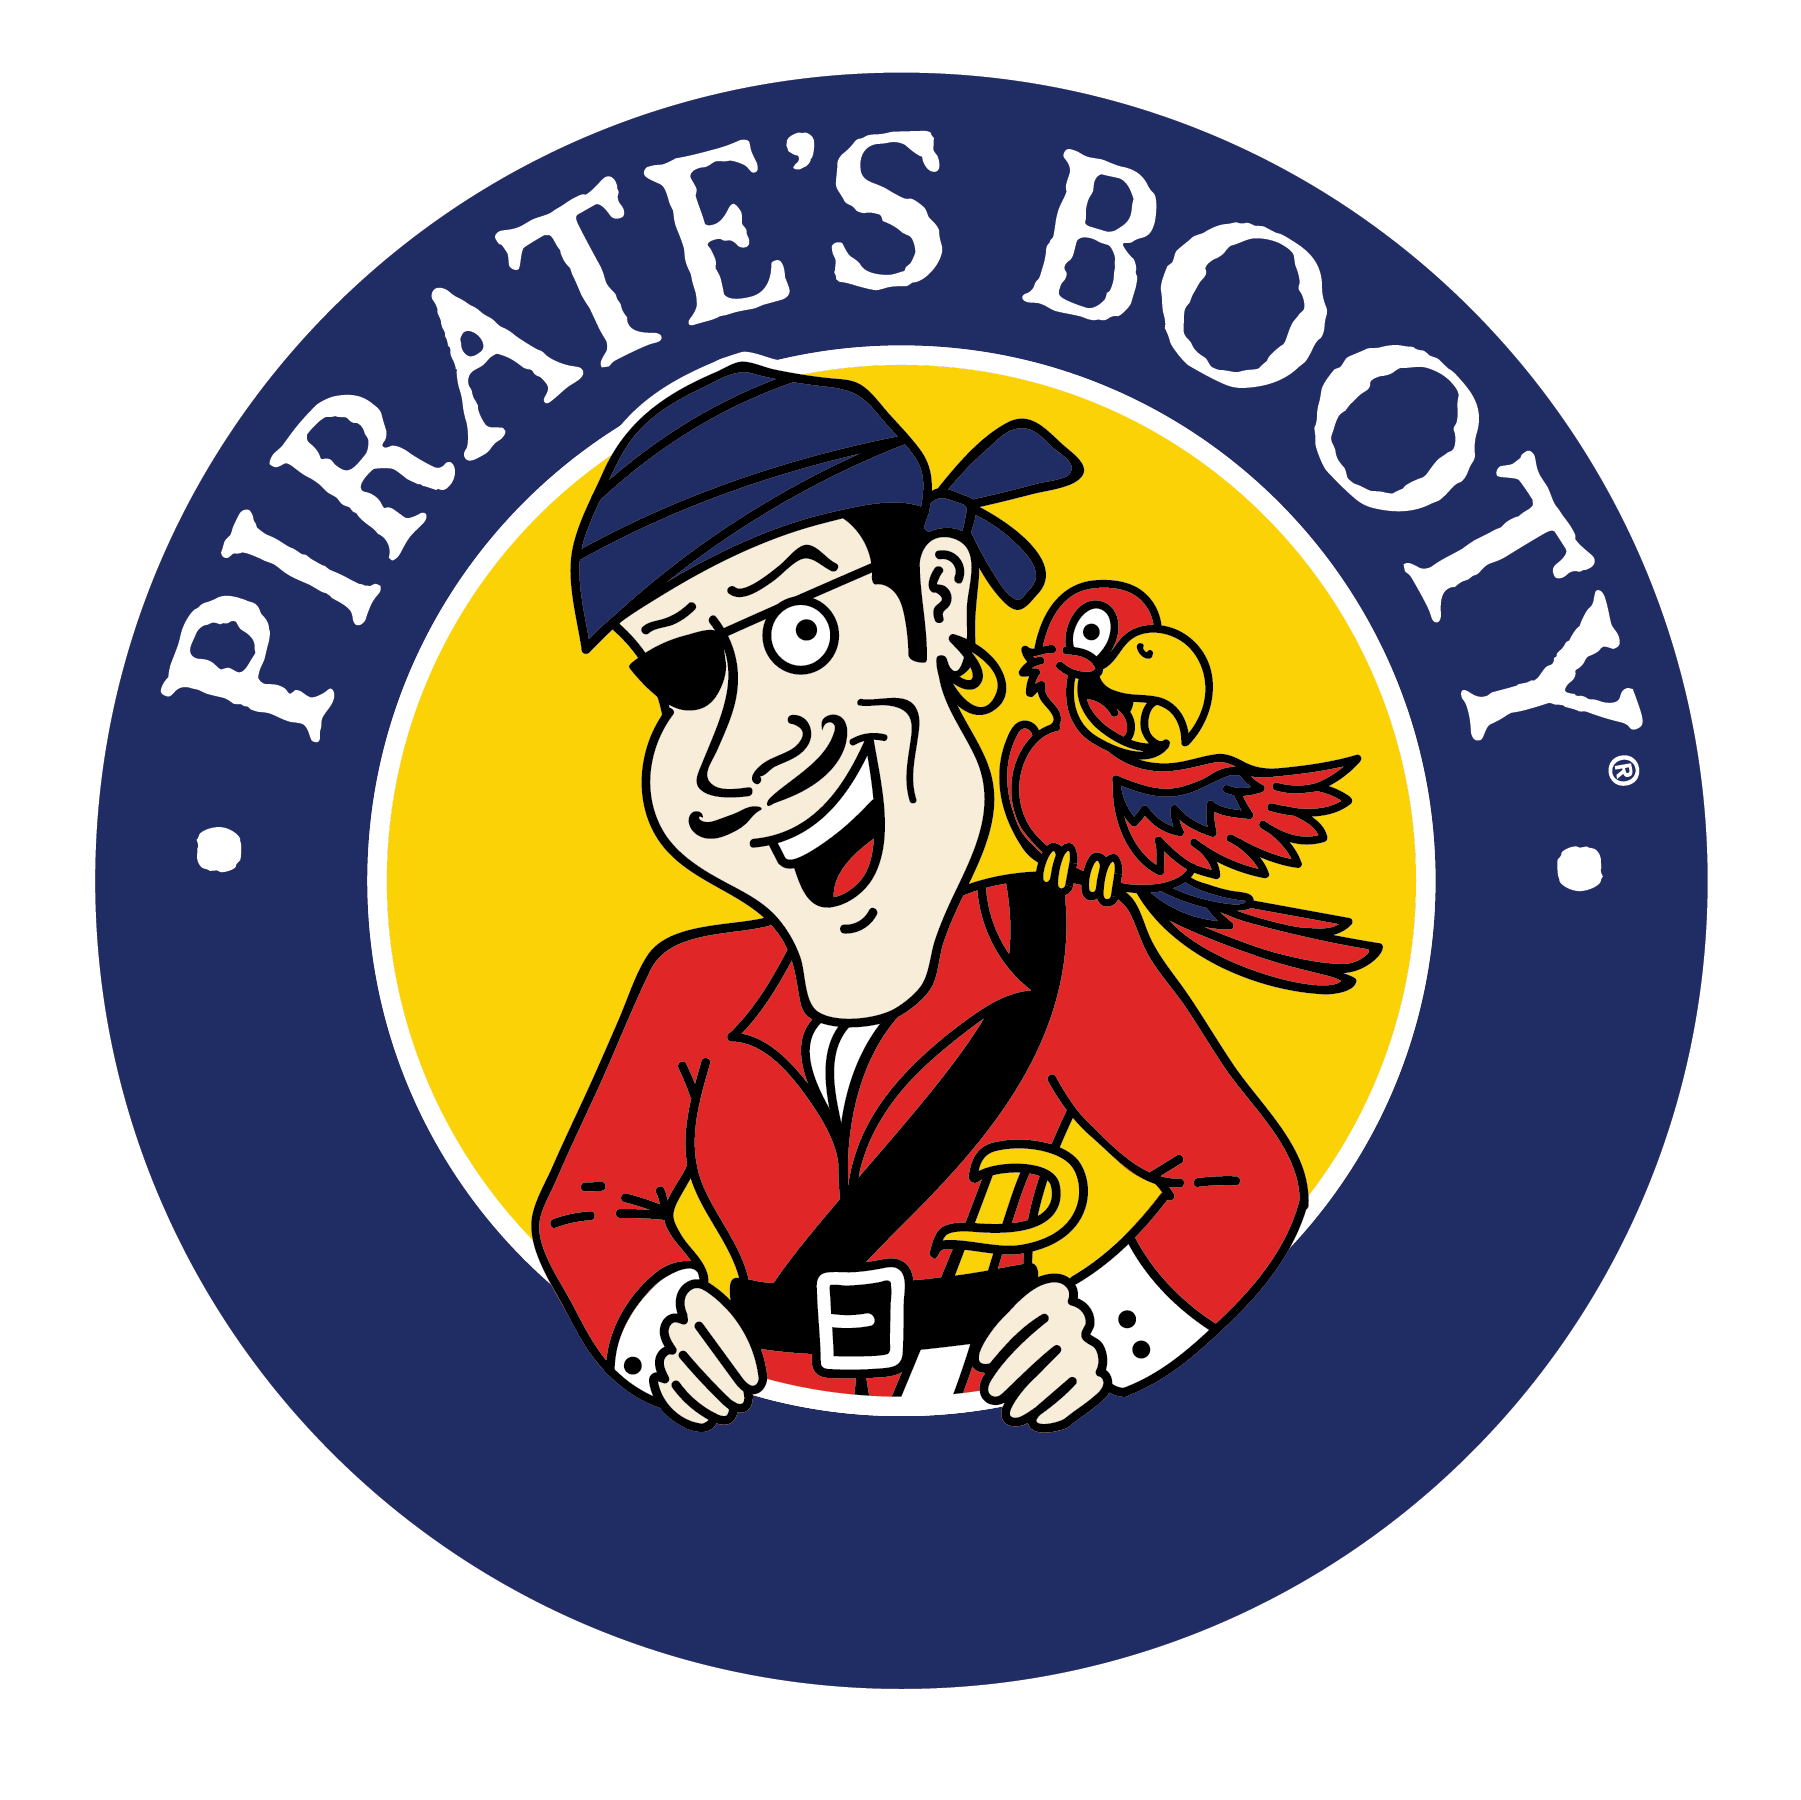 Pirate's Booty Logo